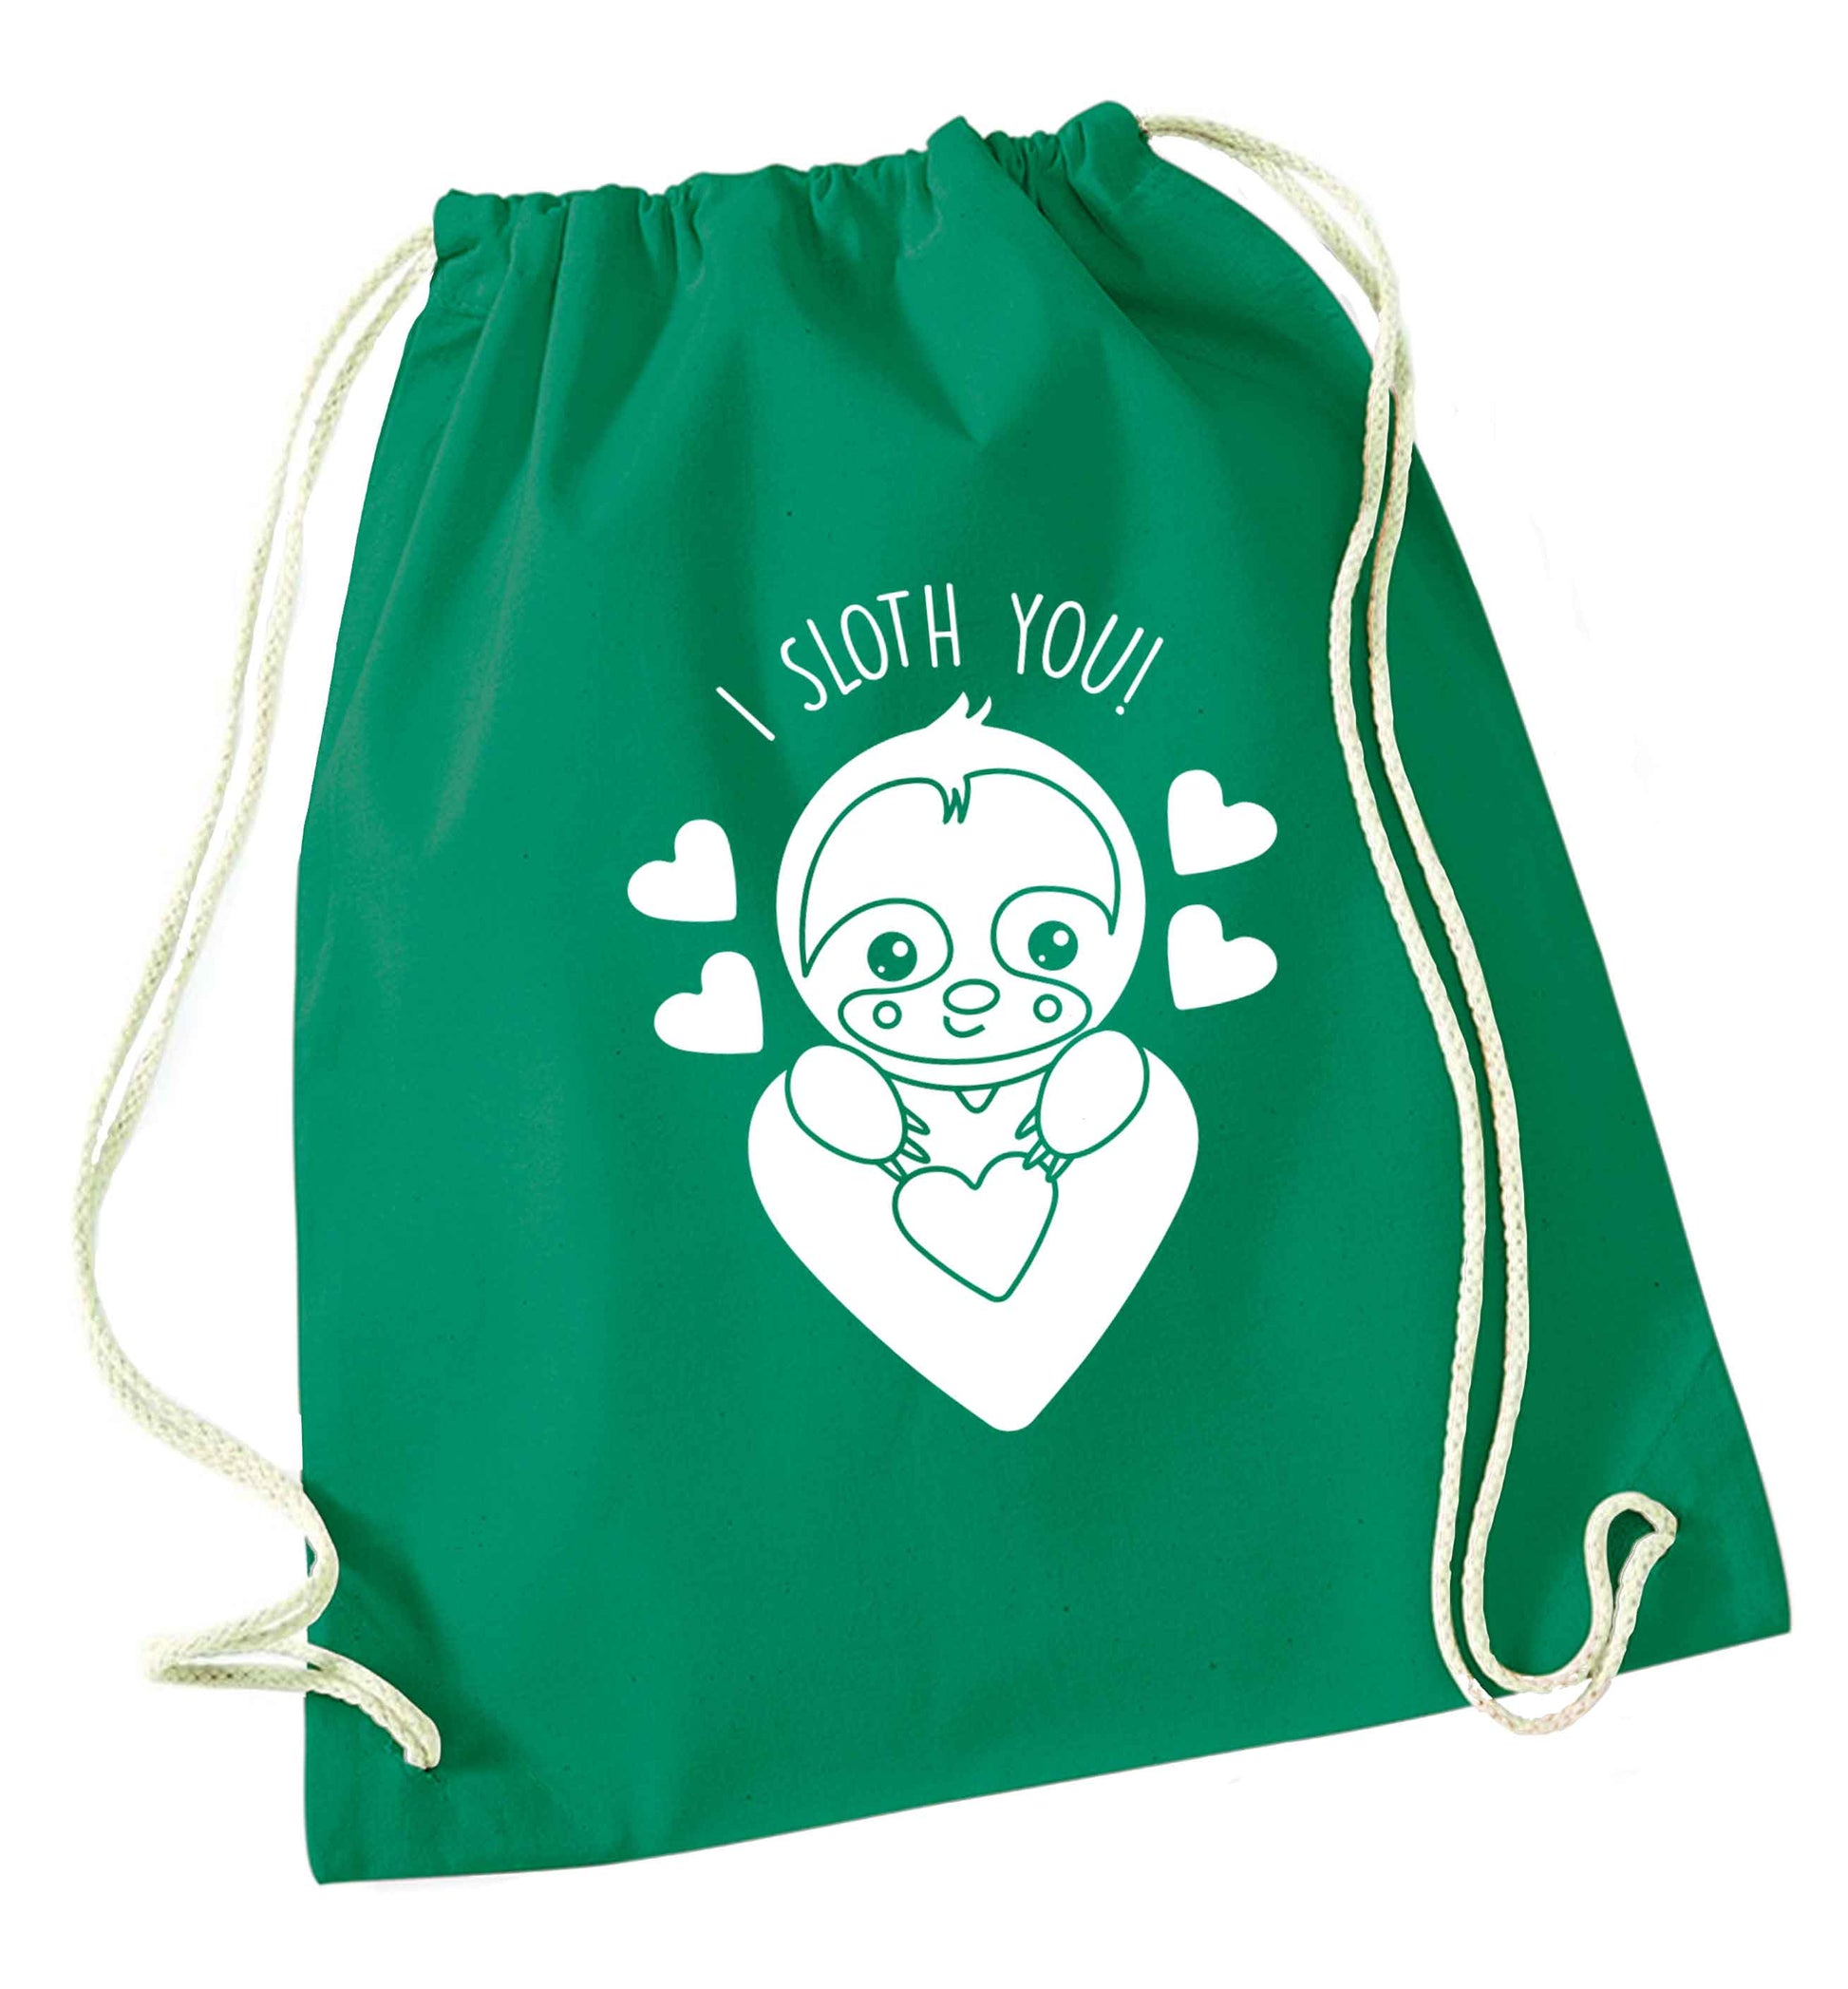 I sloth you green drawstring bag